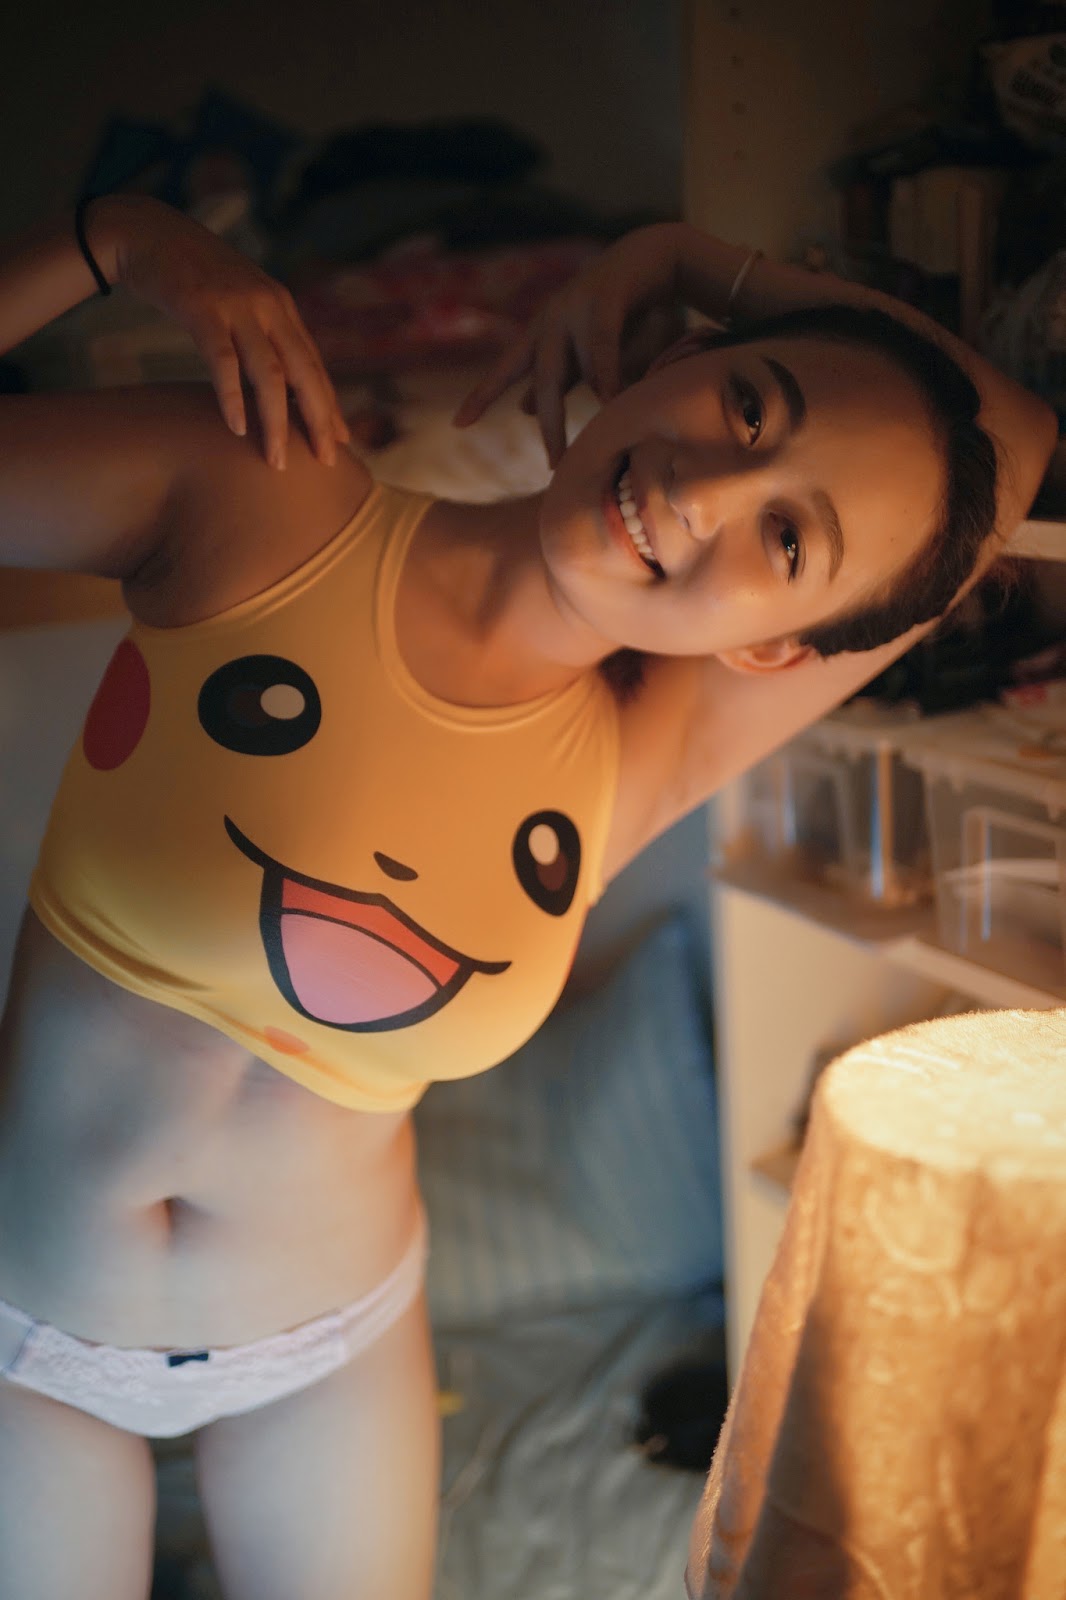 Hot girl..pikachu concept…